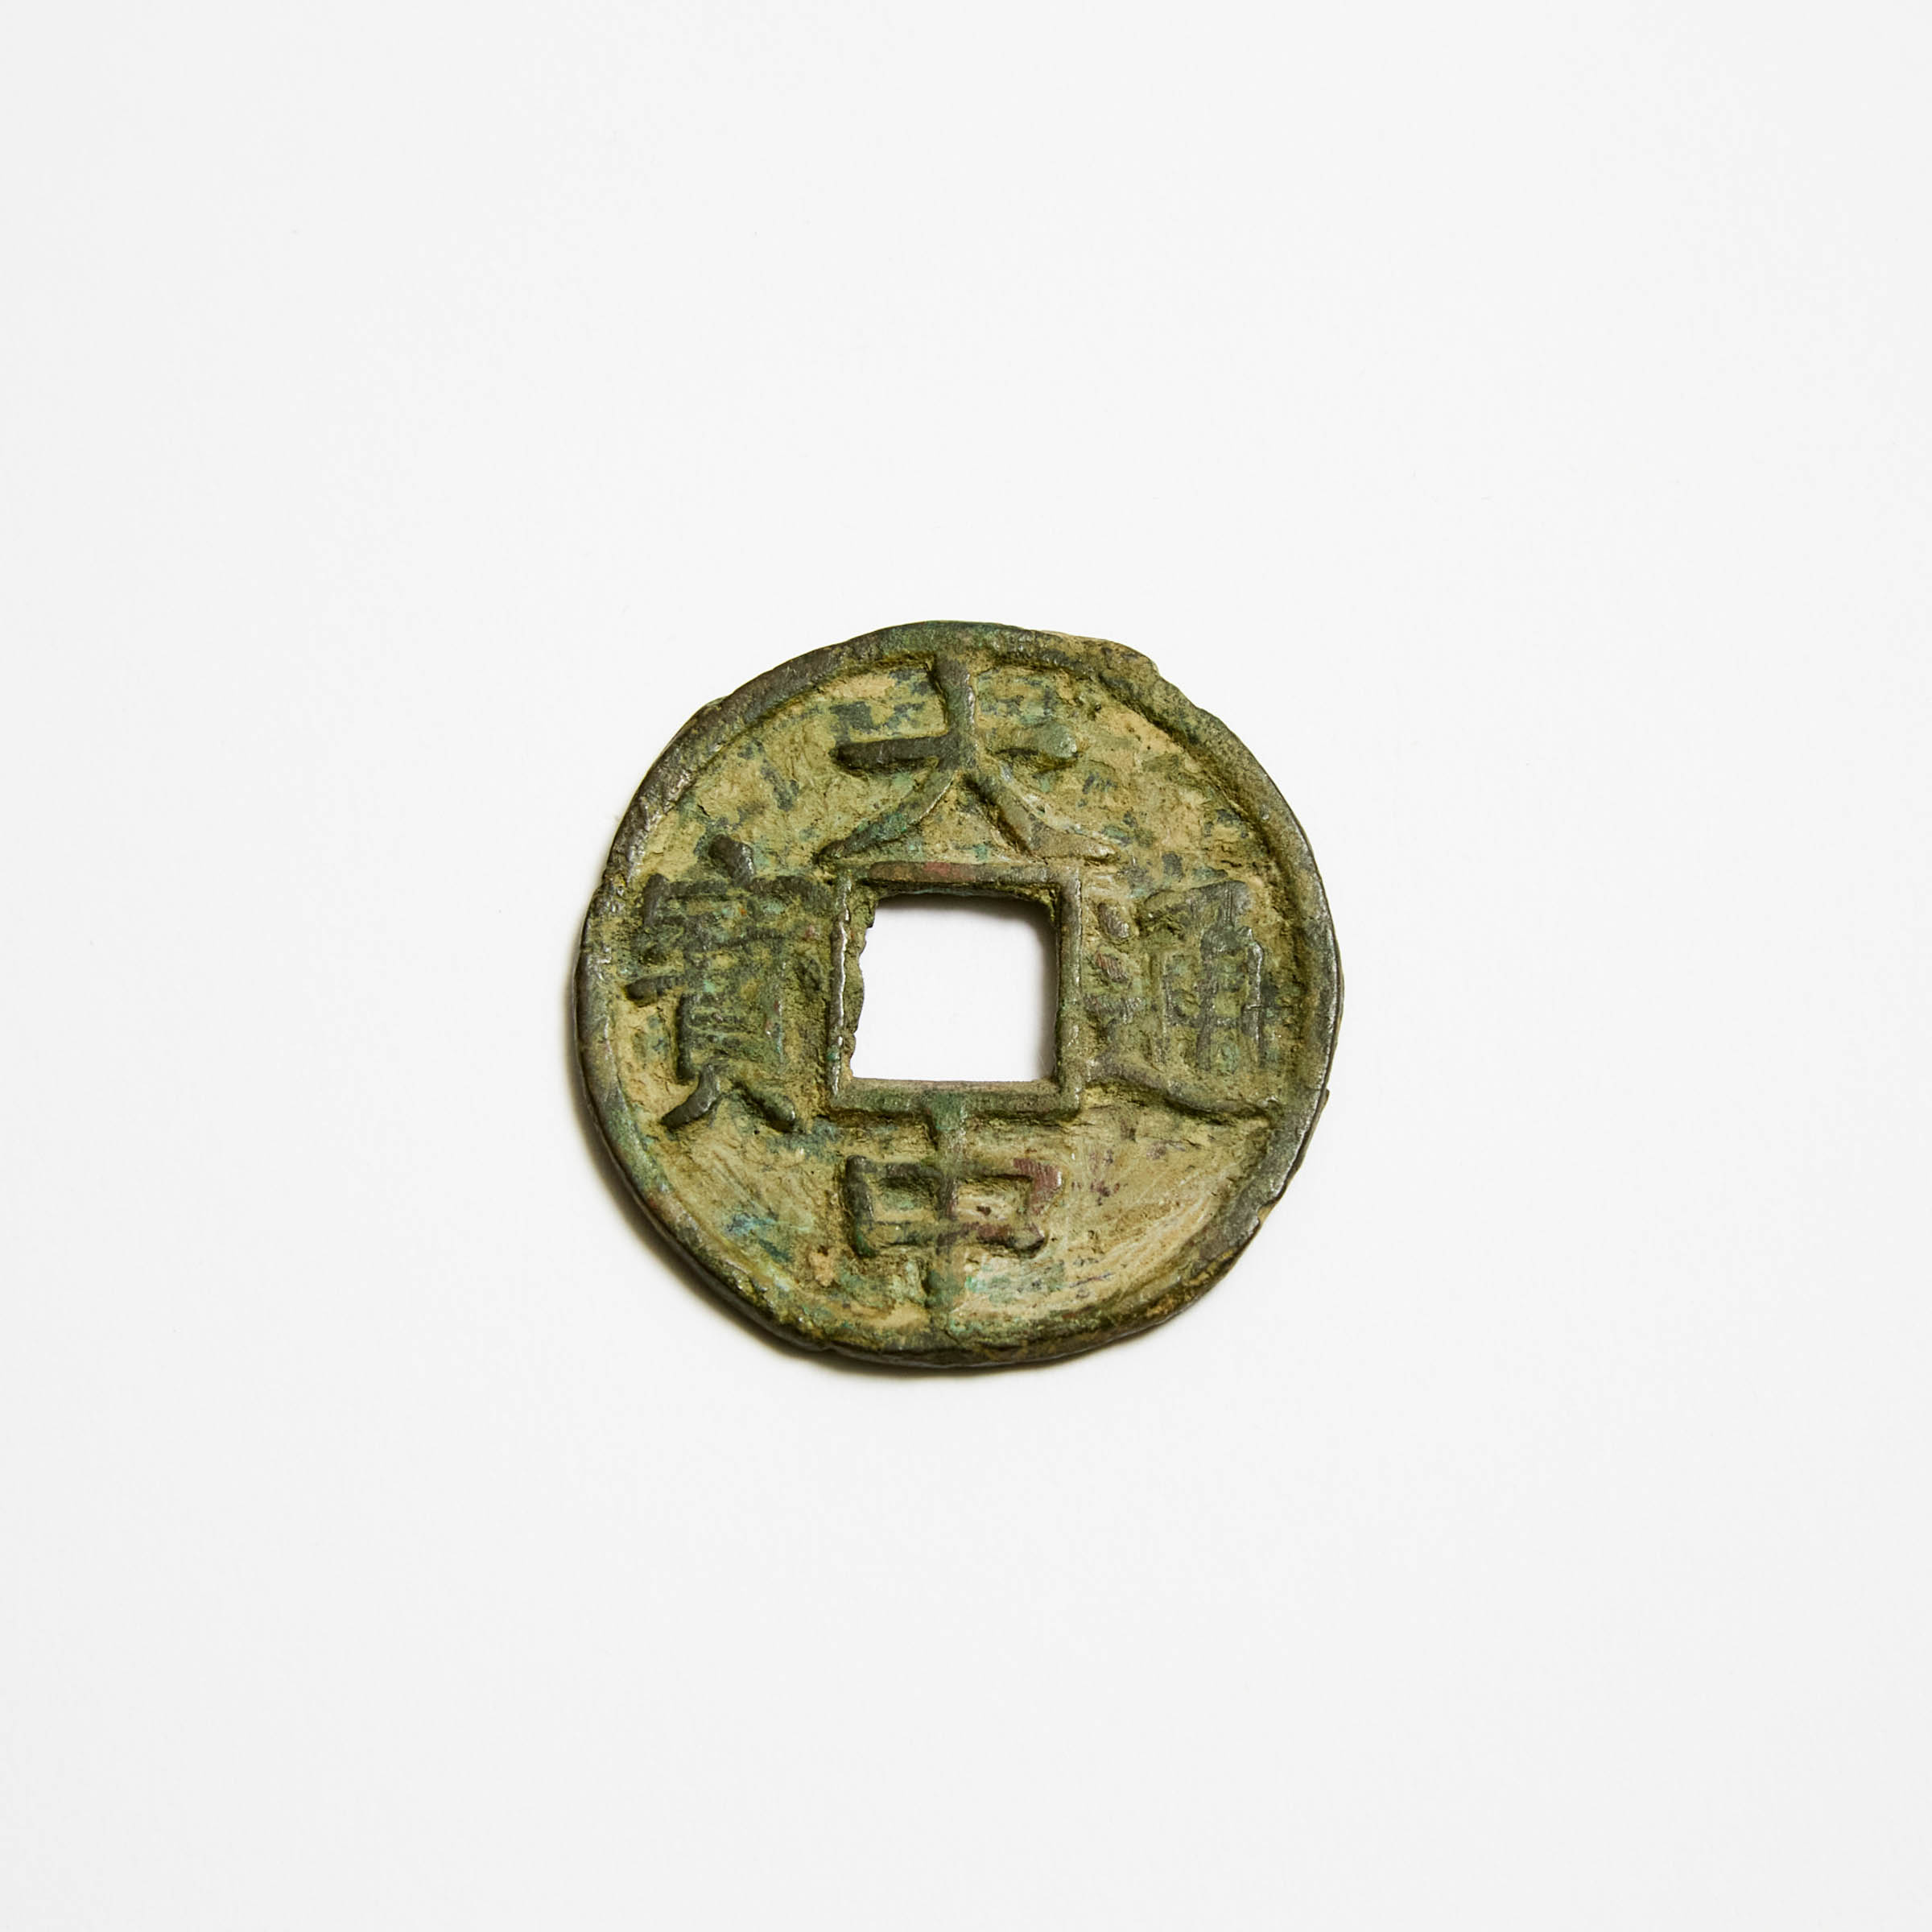 A Chinese Cash Coin, Dazhong Tongbao, Guilin Mint